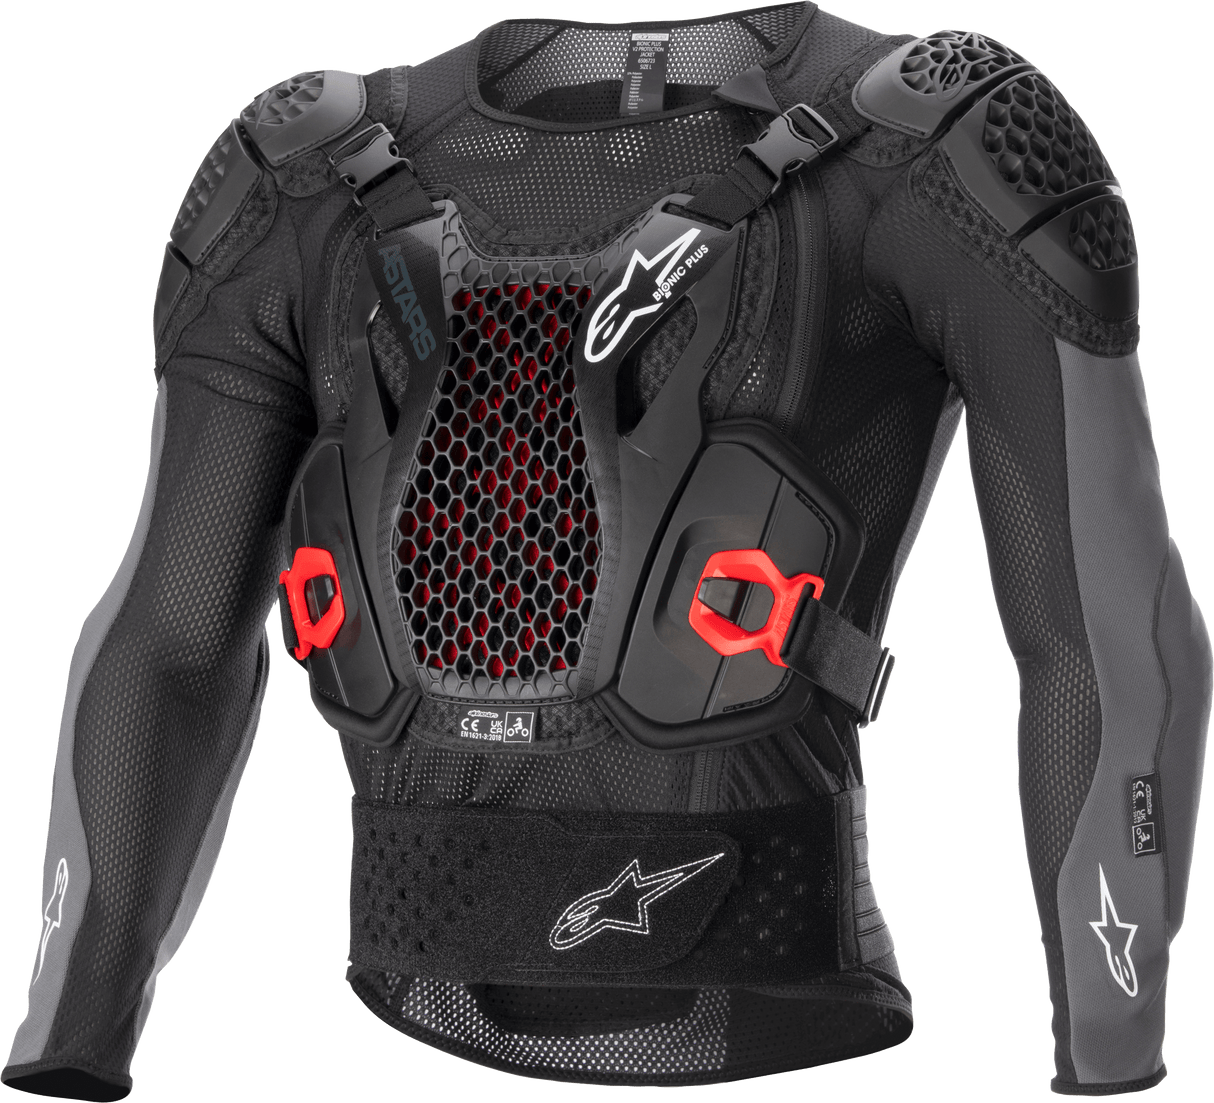 Alpine Stars Bionic Action V2 Protection Jacket